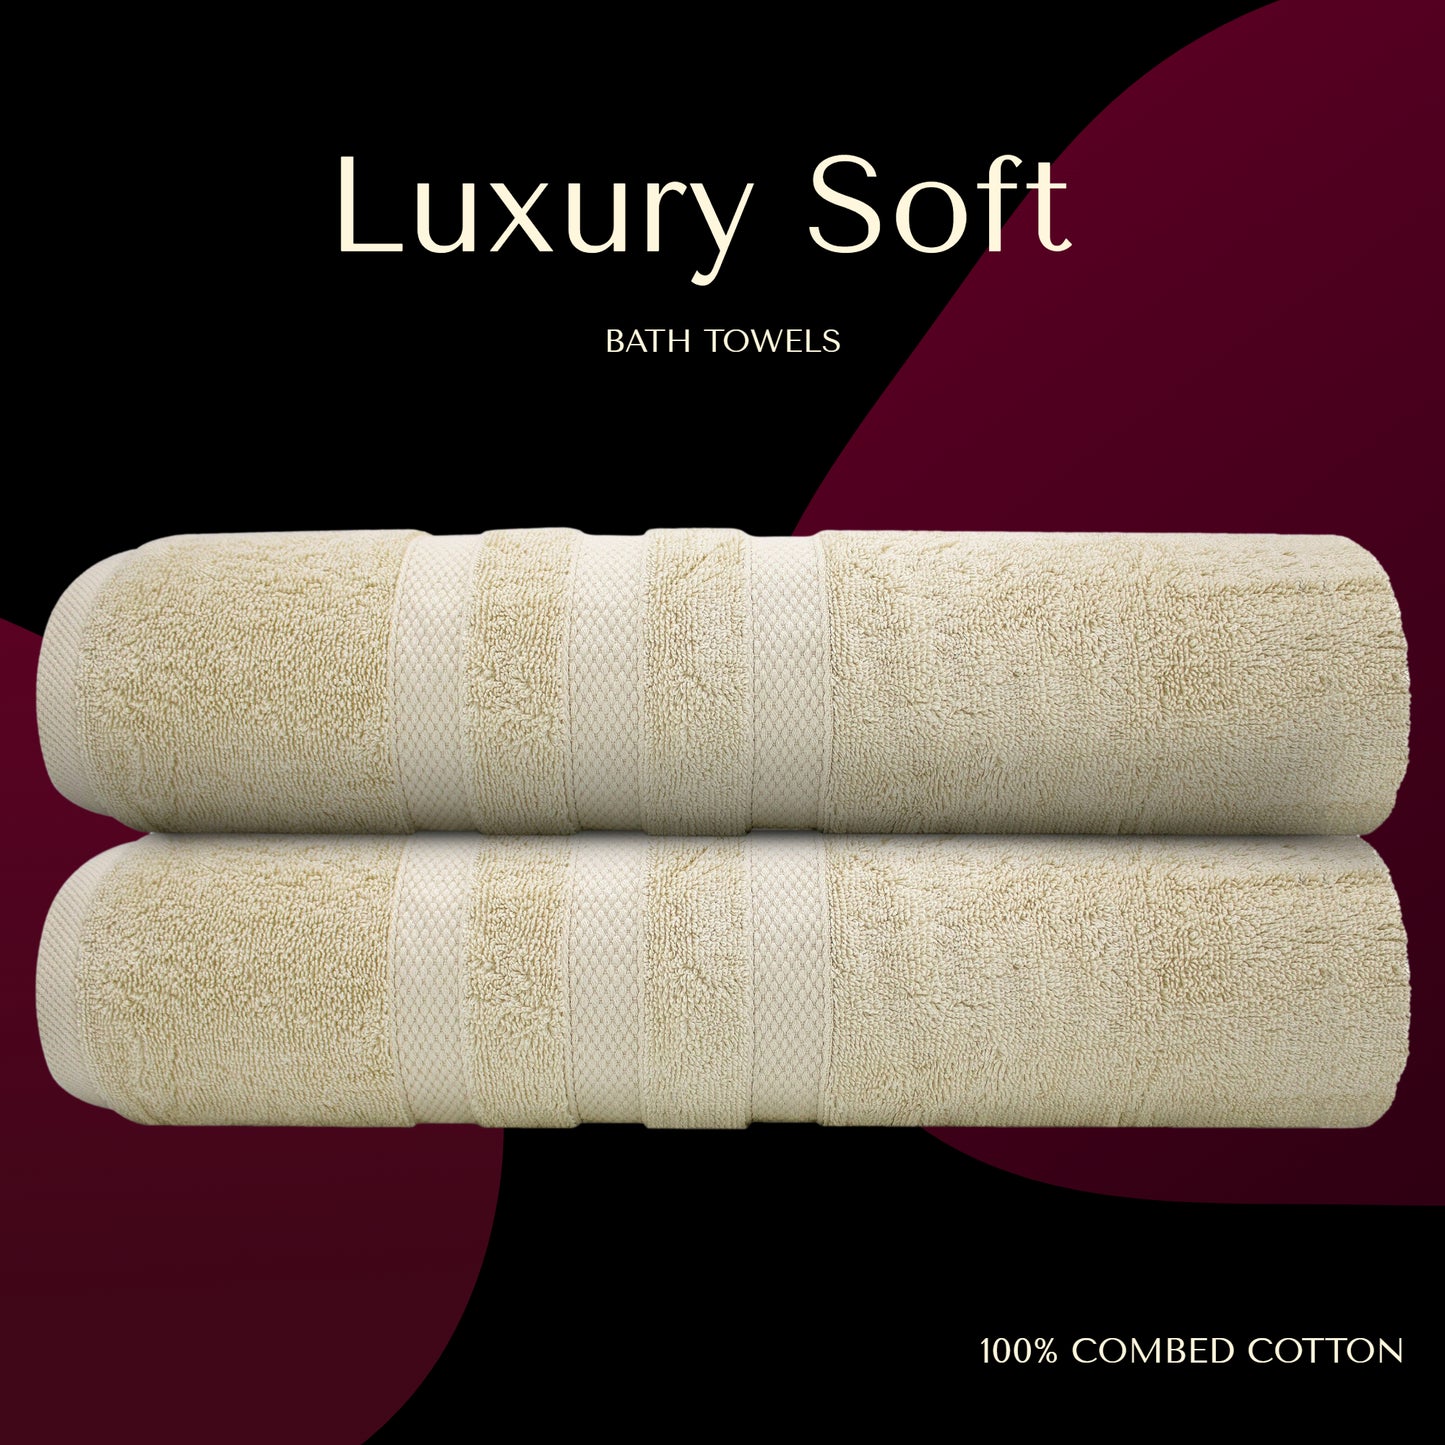 Luxury Bath Sheet Towels Extra Large 35x70 Inch